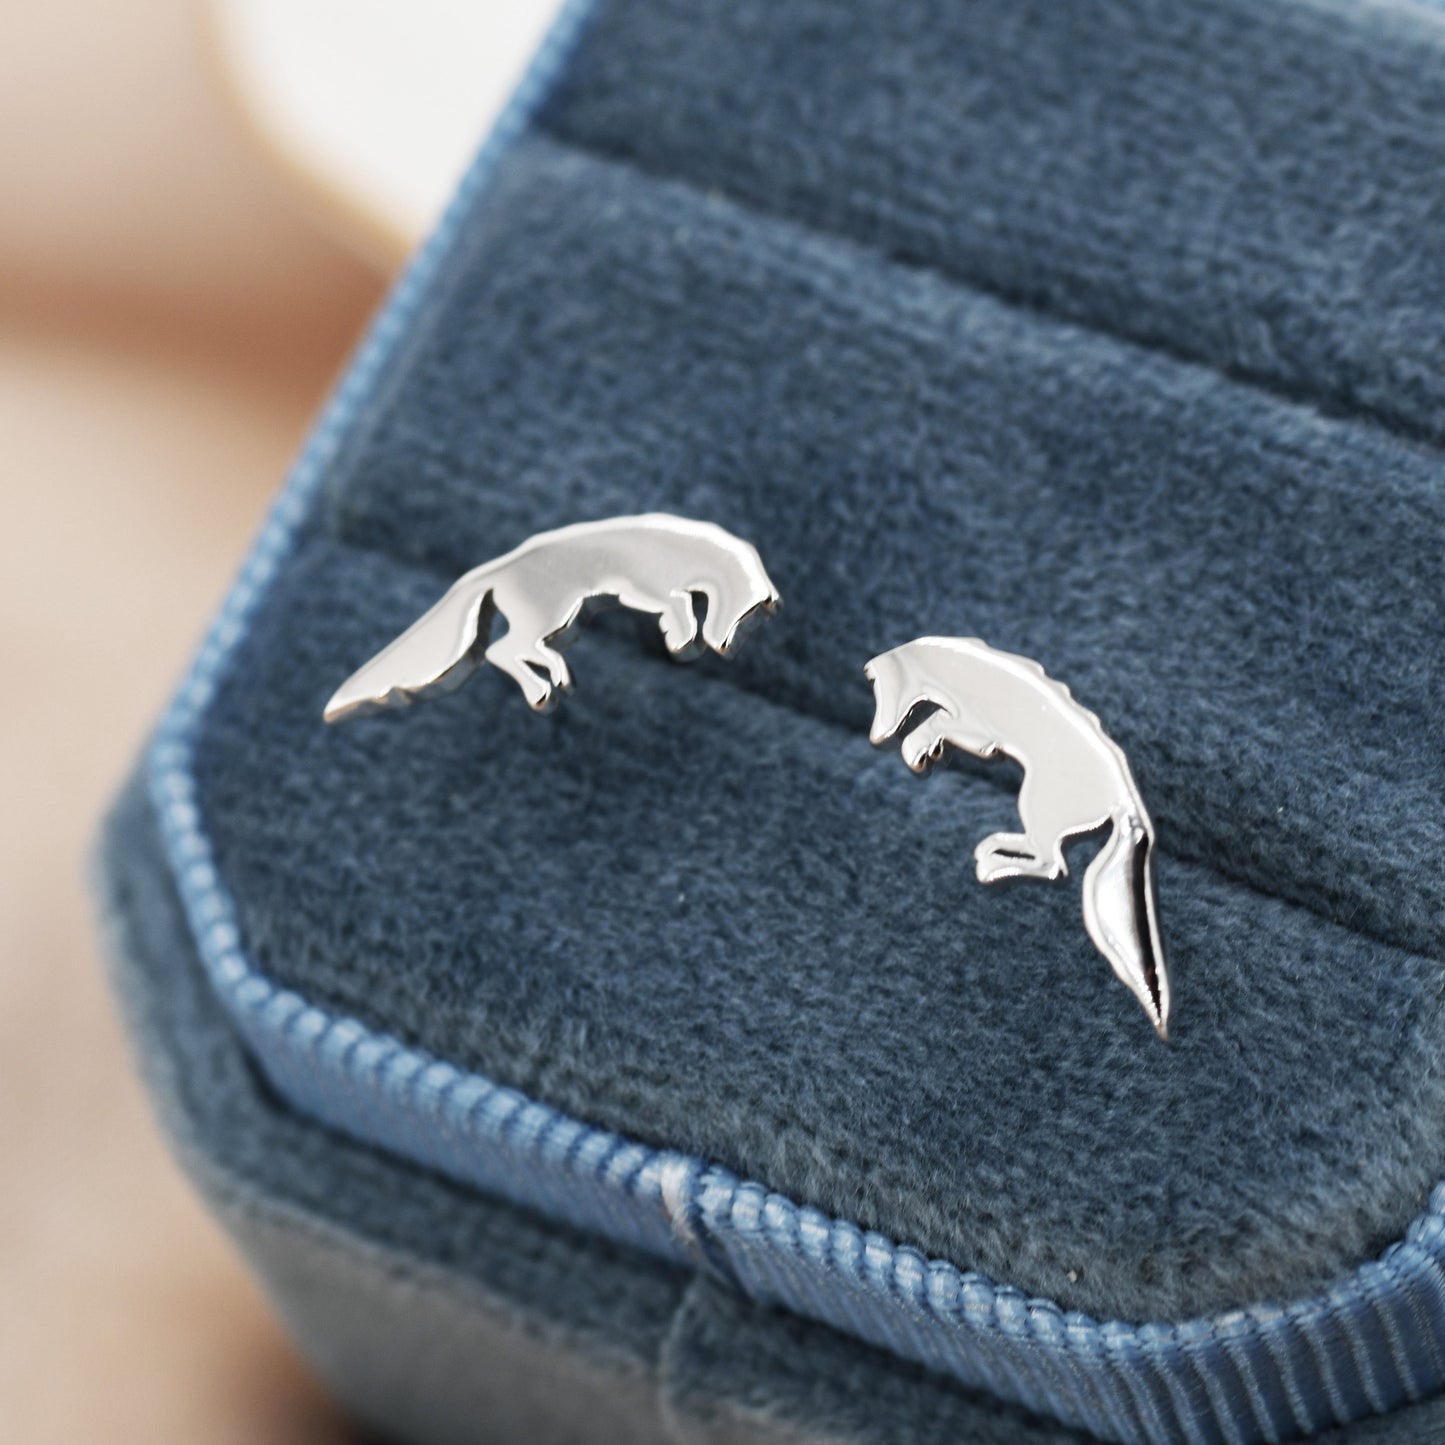 Jumping Fox Stud Earrings in Sterling Silver, Pouncing Fox Earrings,  Nature Inspired Animal Earrings